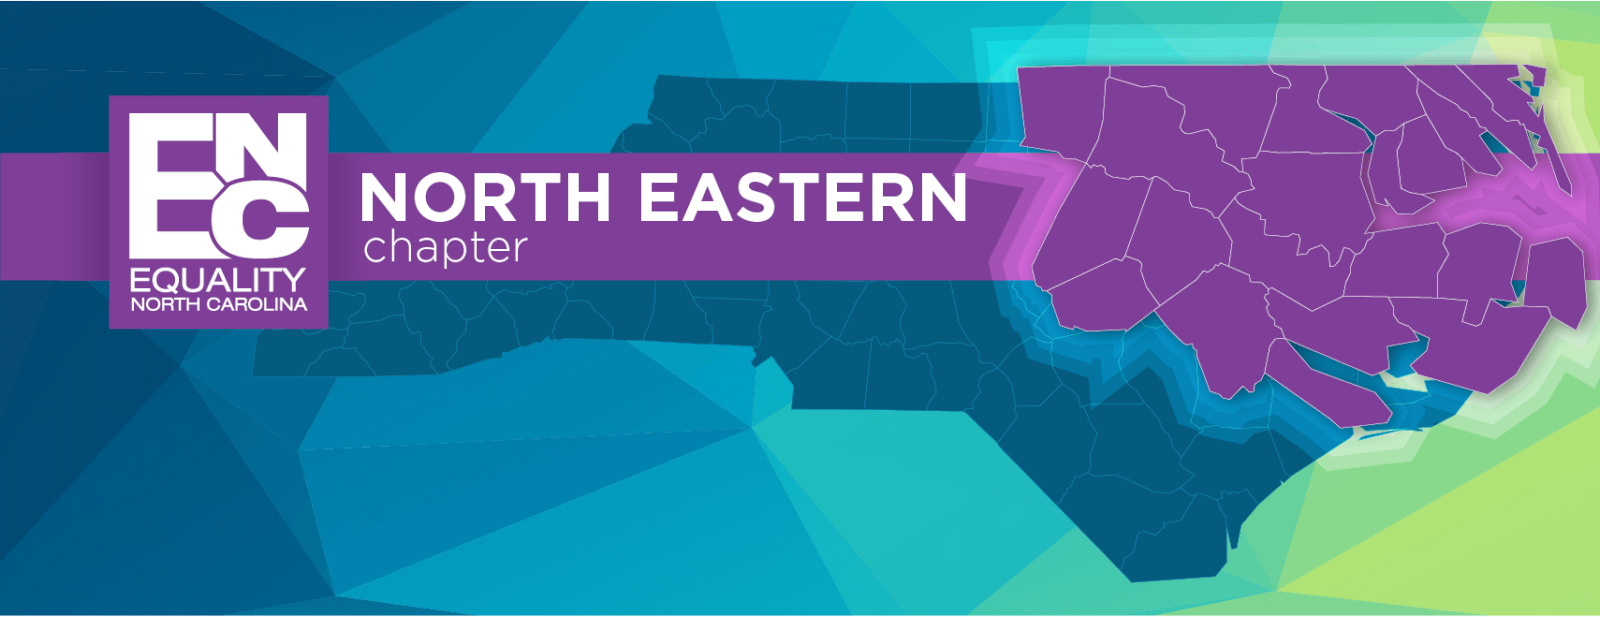 Equality North Carolina North Eastern Chapter